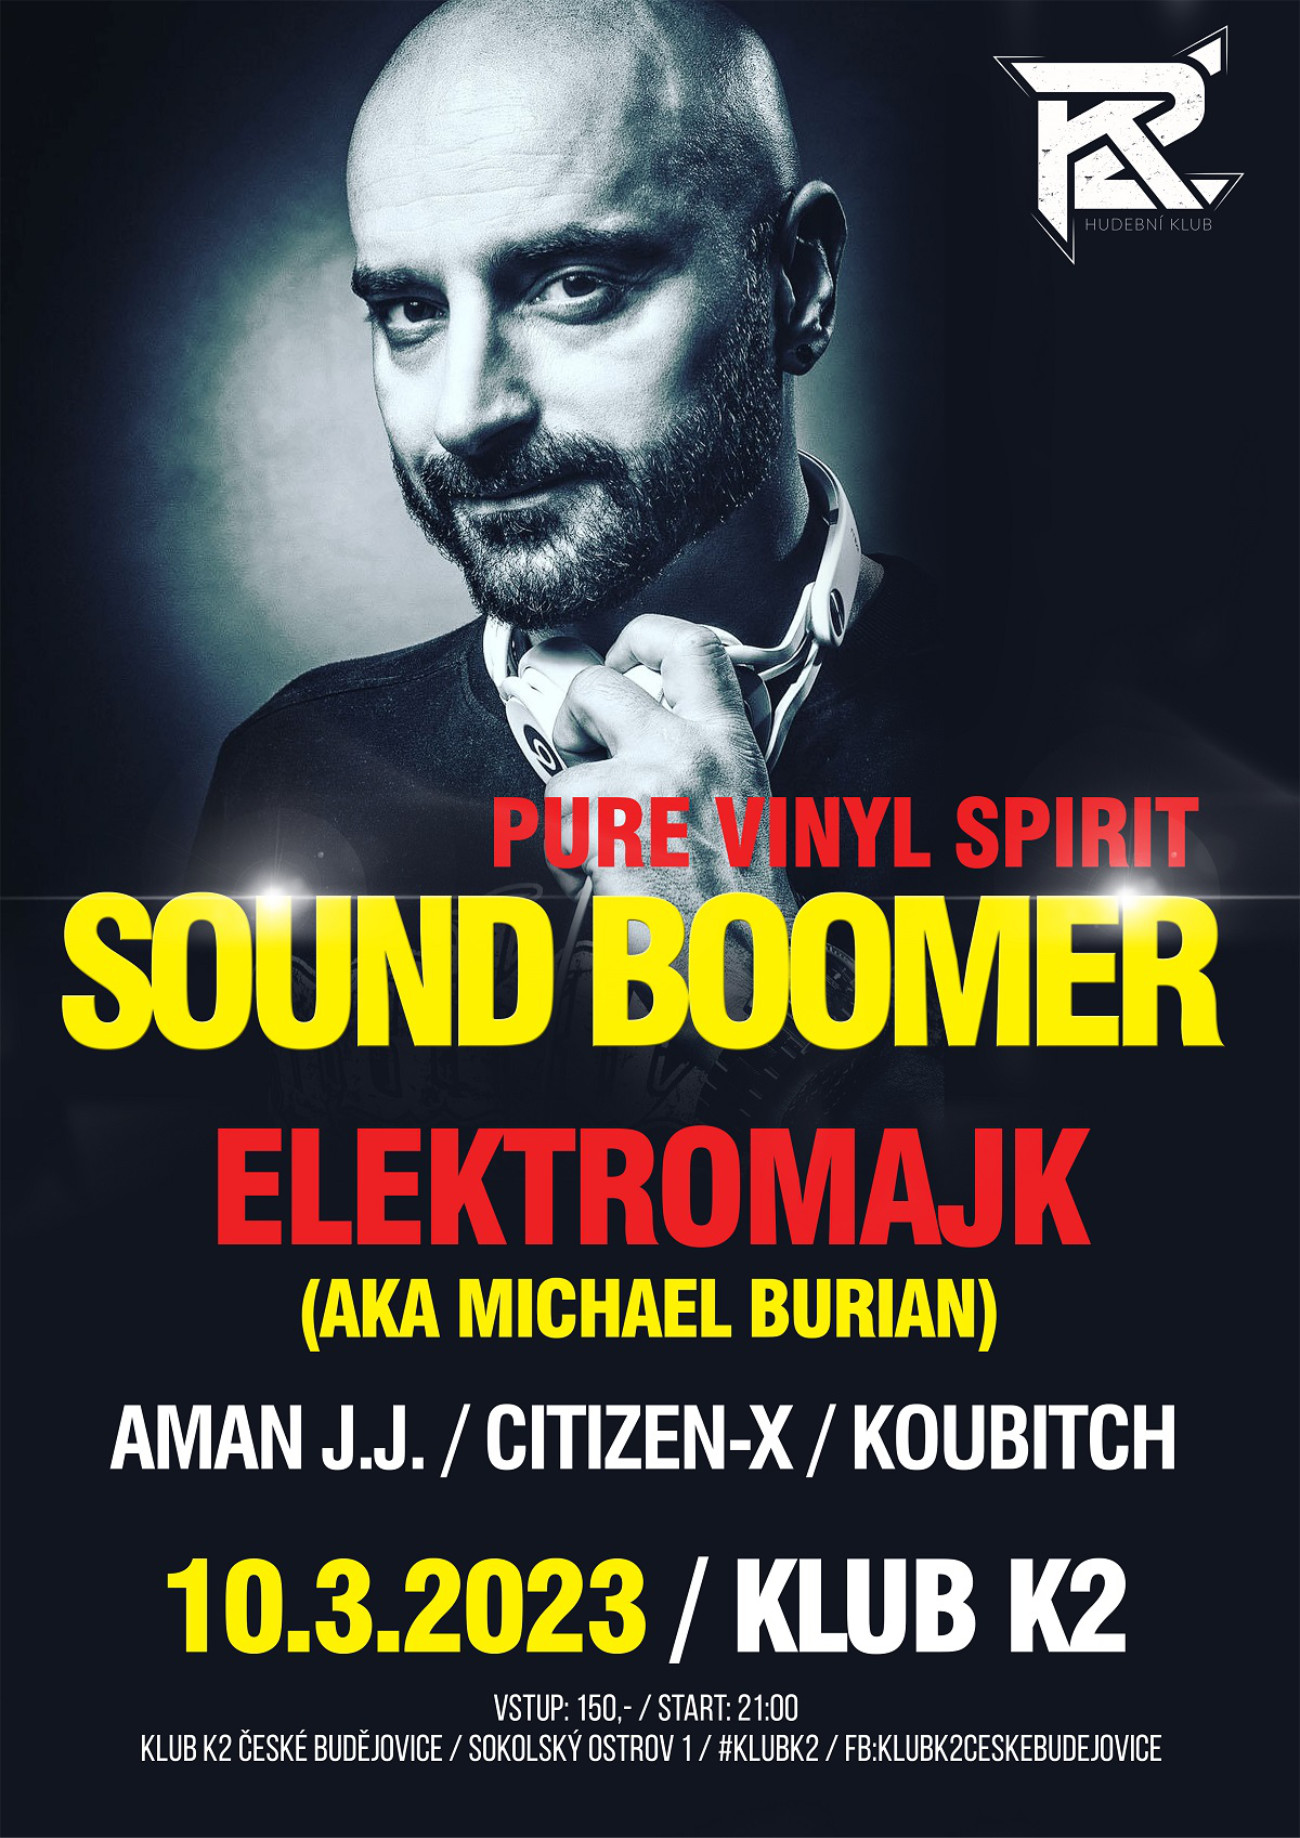 SOUND BOOMER / Pure Vinyl spirit w. Elektromajk /